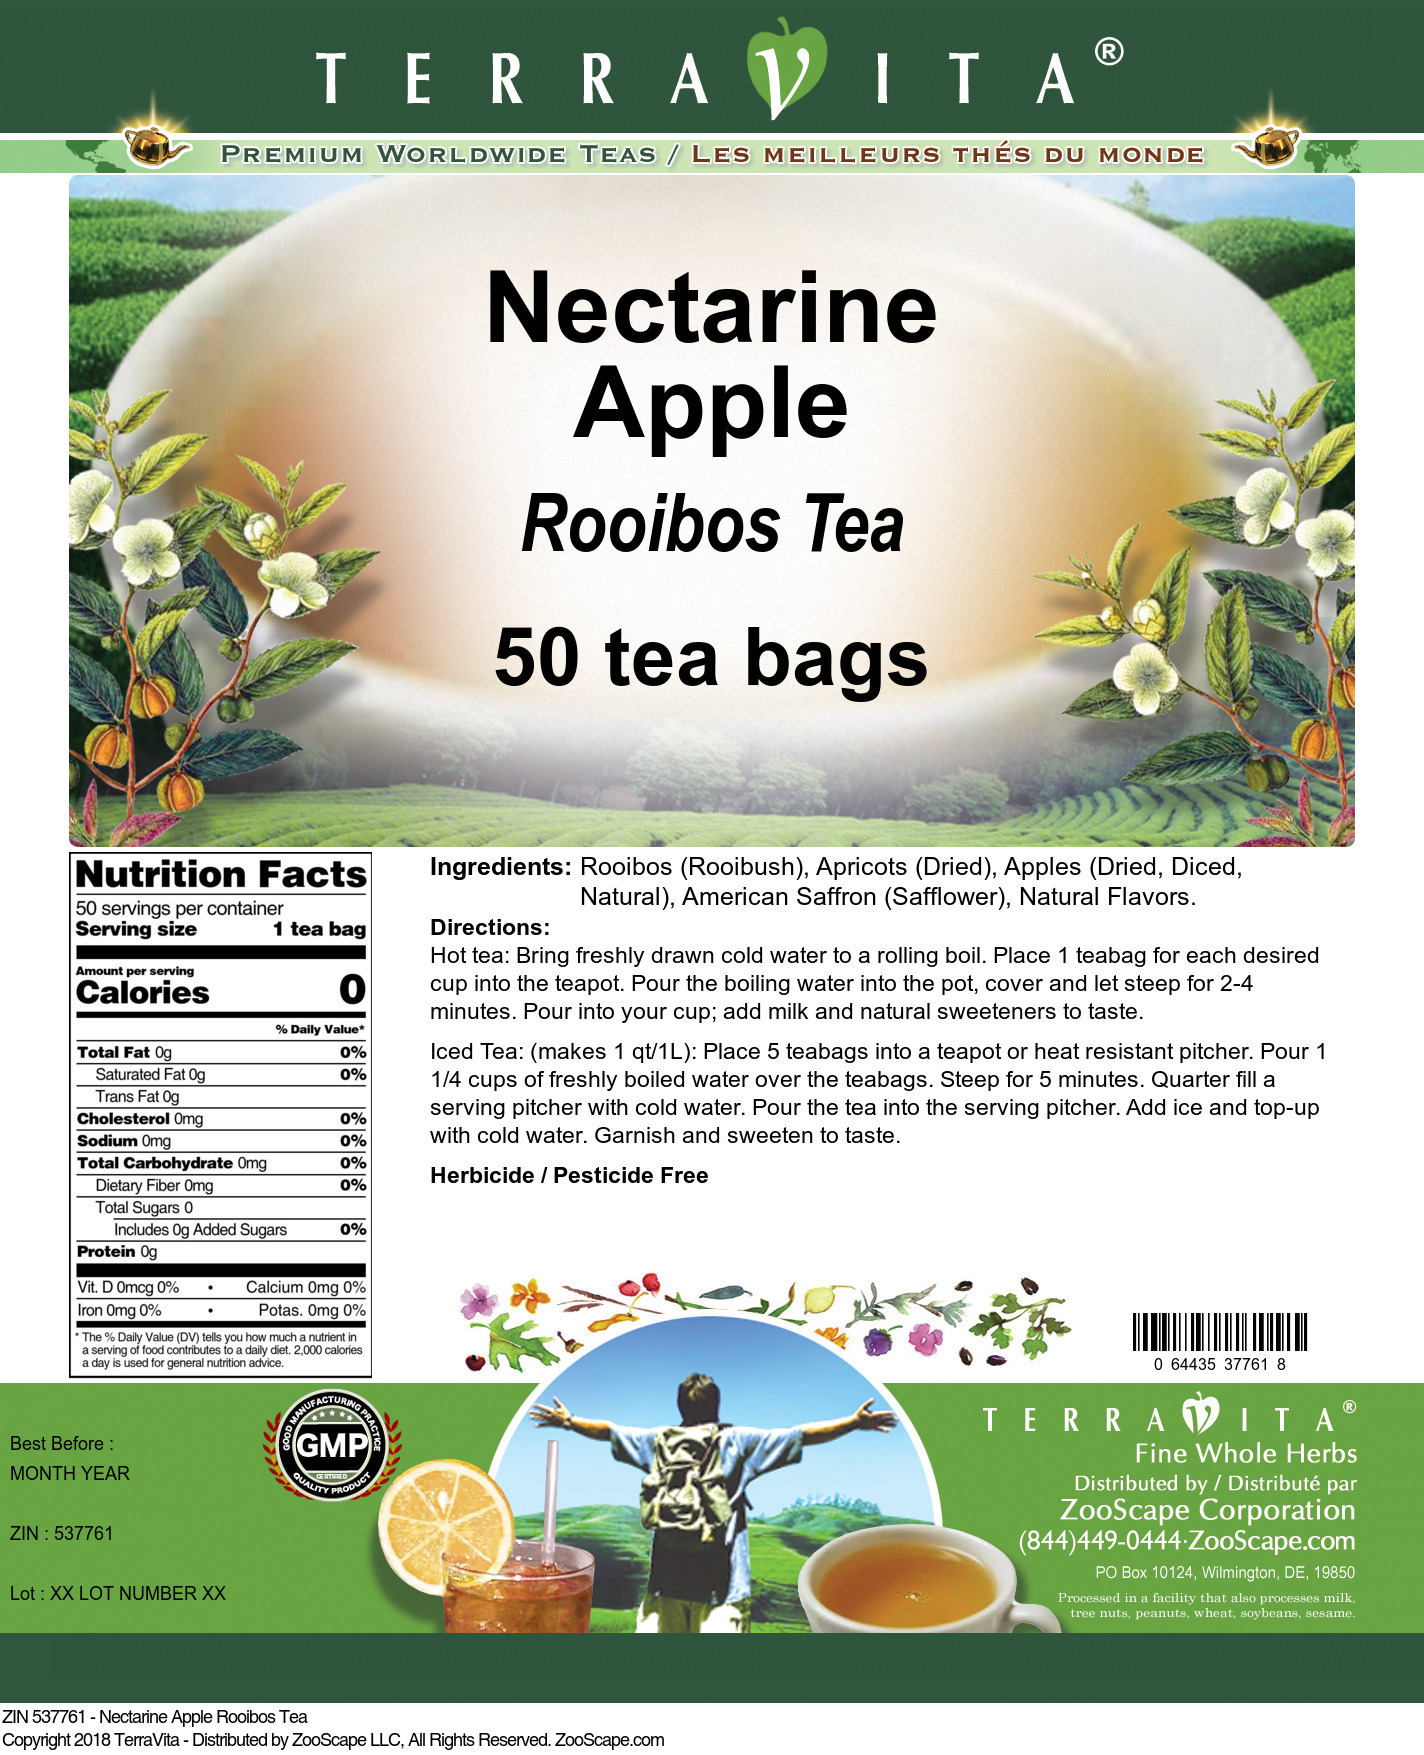 Nectarine Apple Rooibos Tea - Label